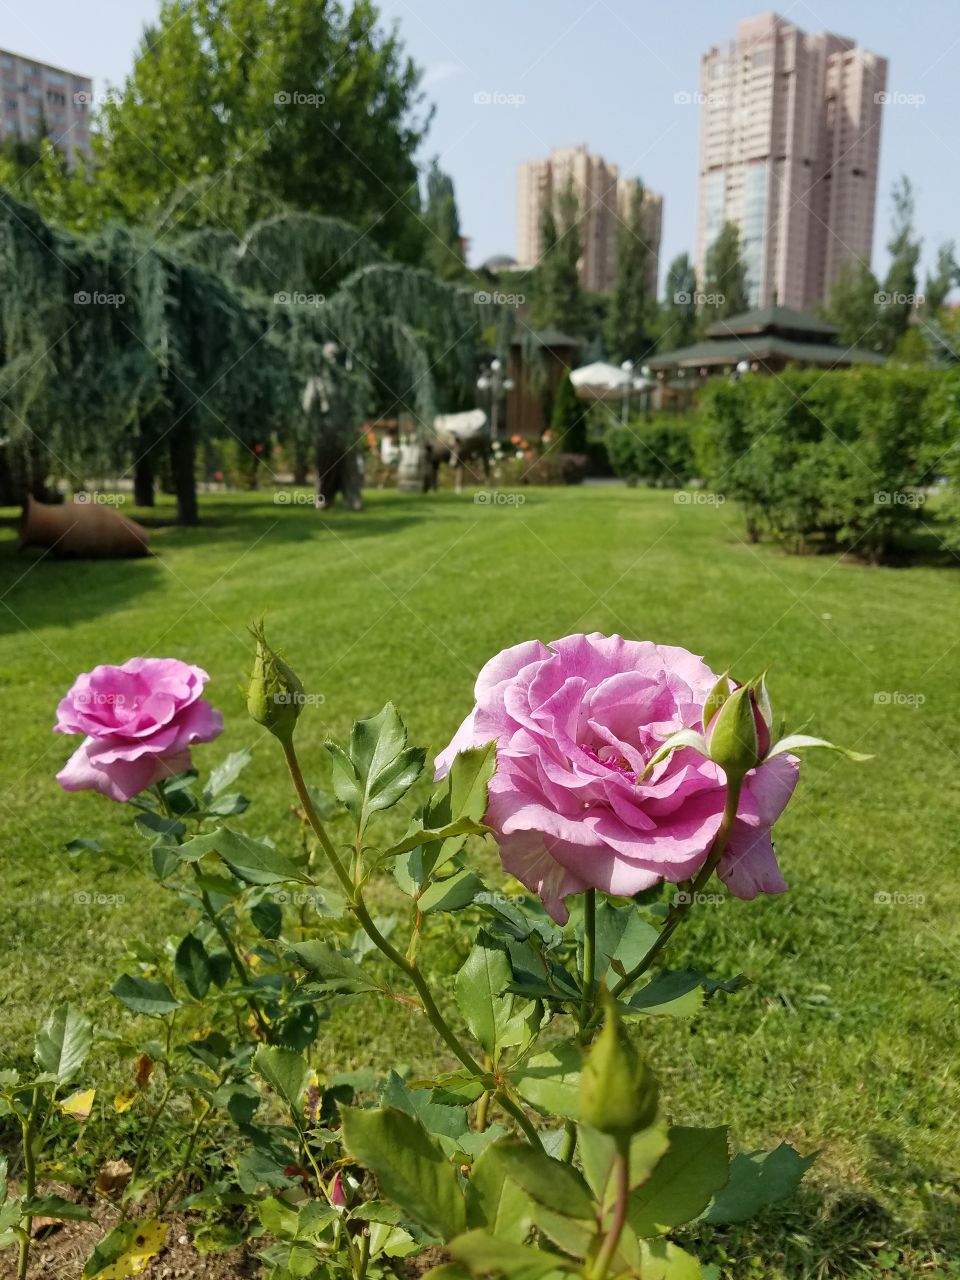 pink roses I'm the dikman vadesi park in Ankara Turkey